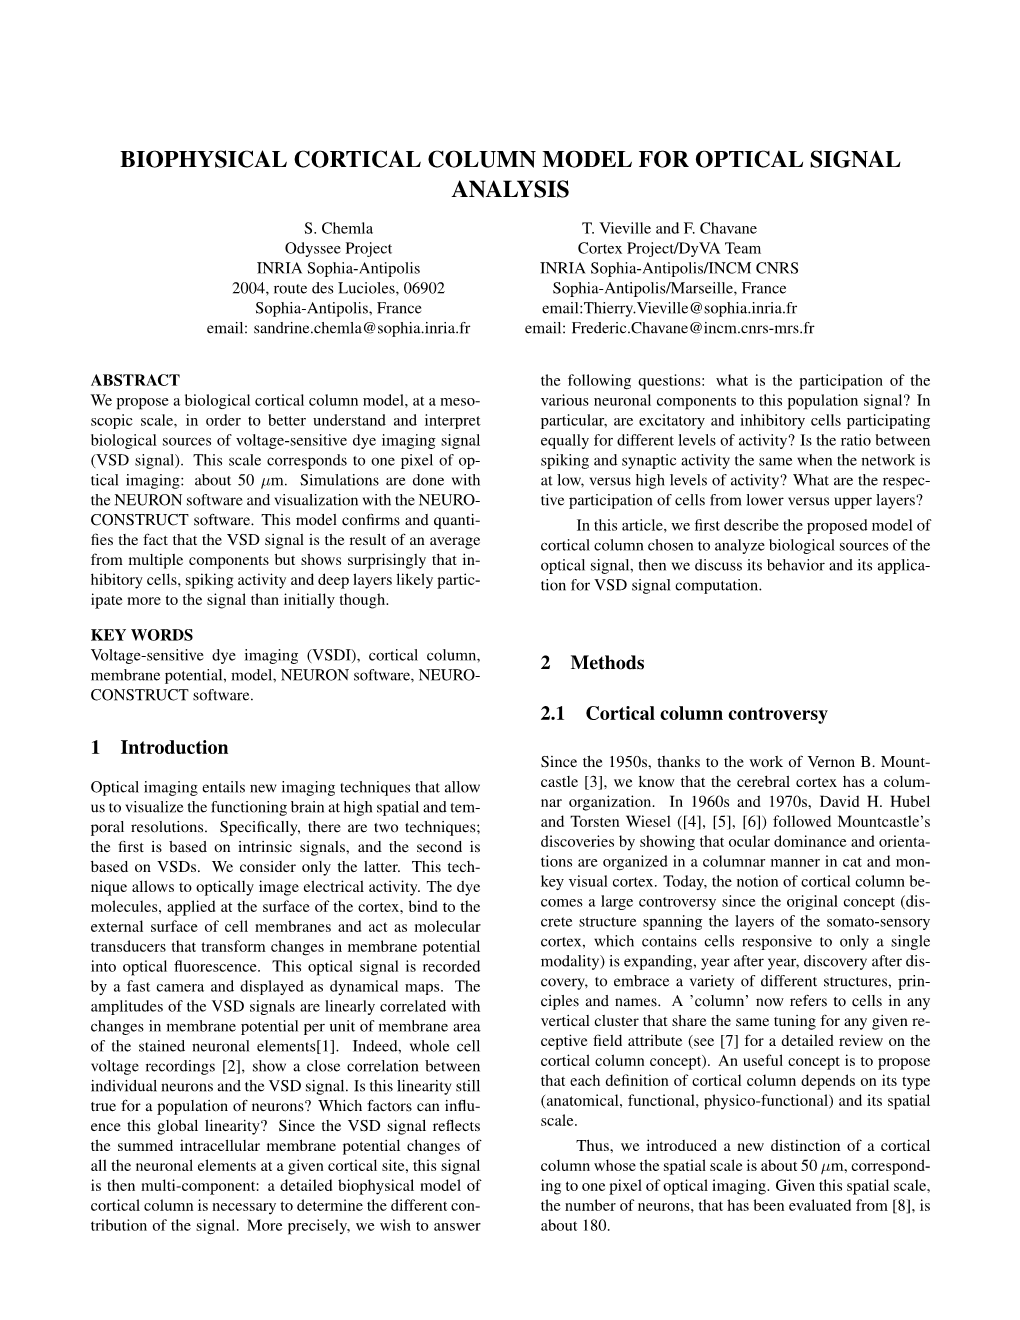 Biophysical Cortical Column Model for Optical Signal Analysis